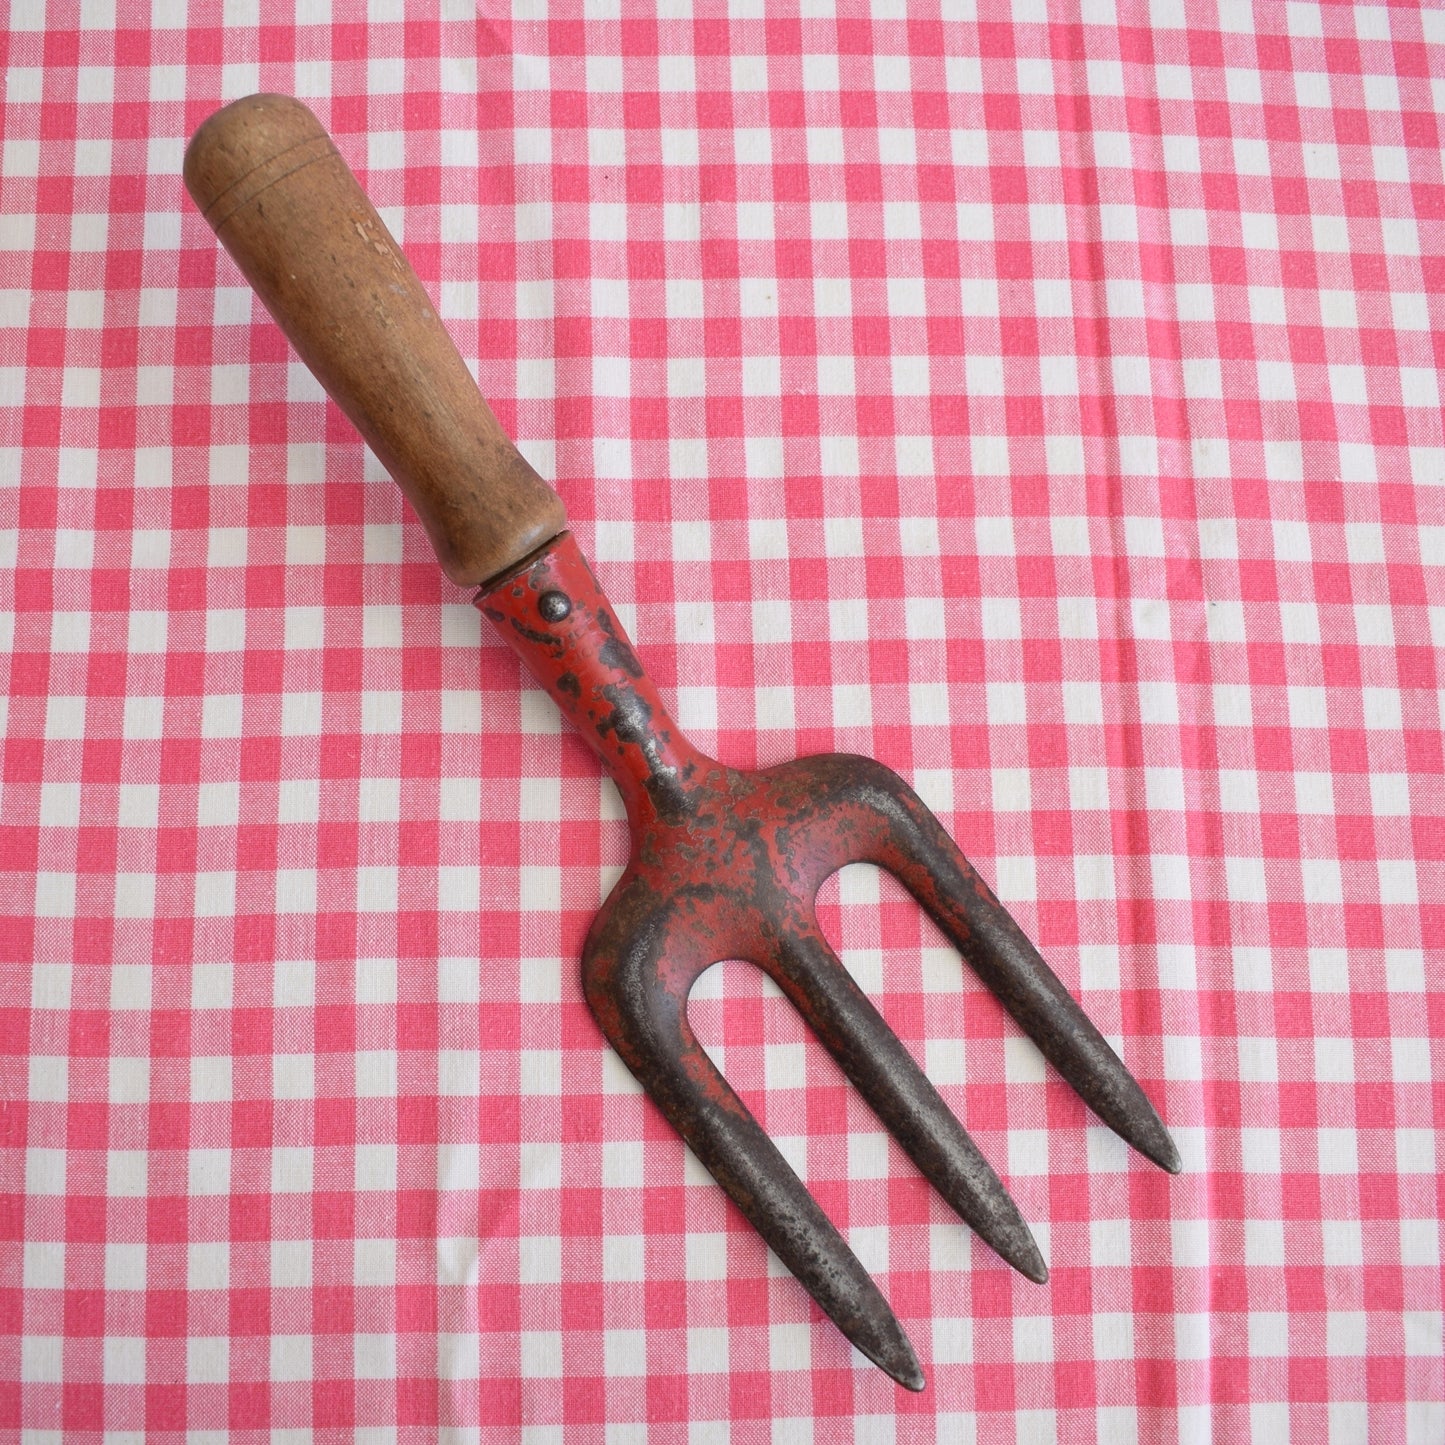 Vintage Hand Tools - Garden Tools